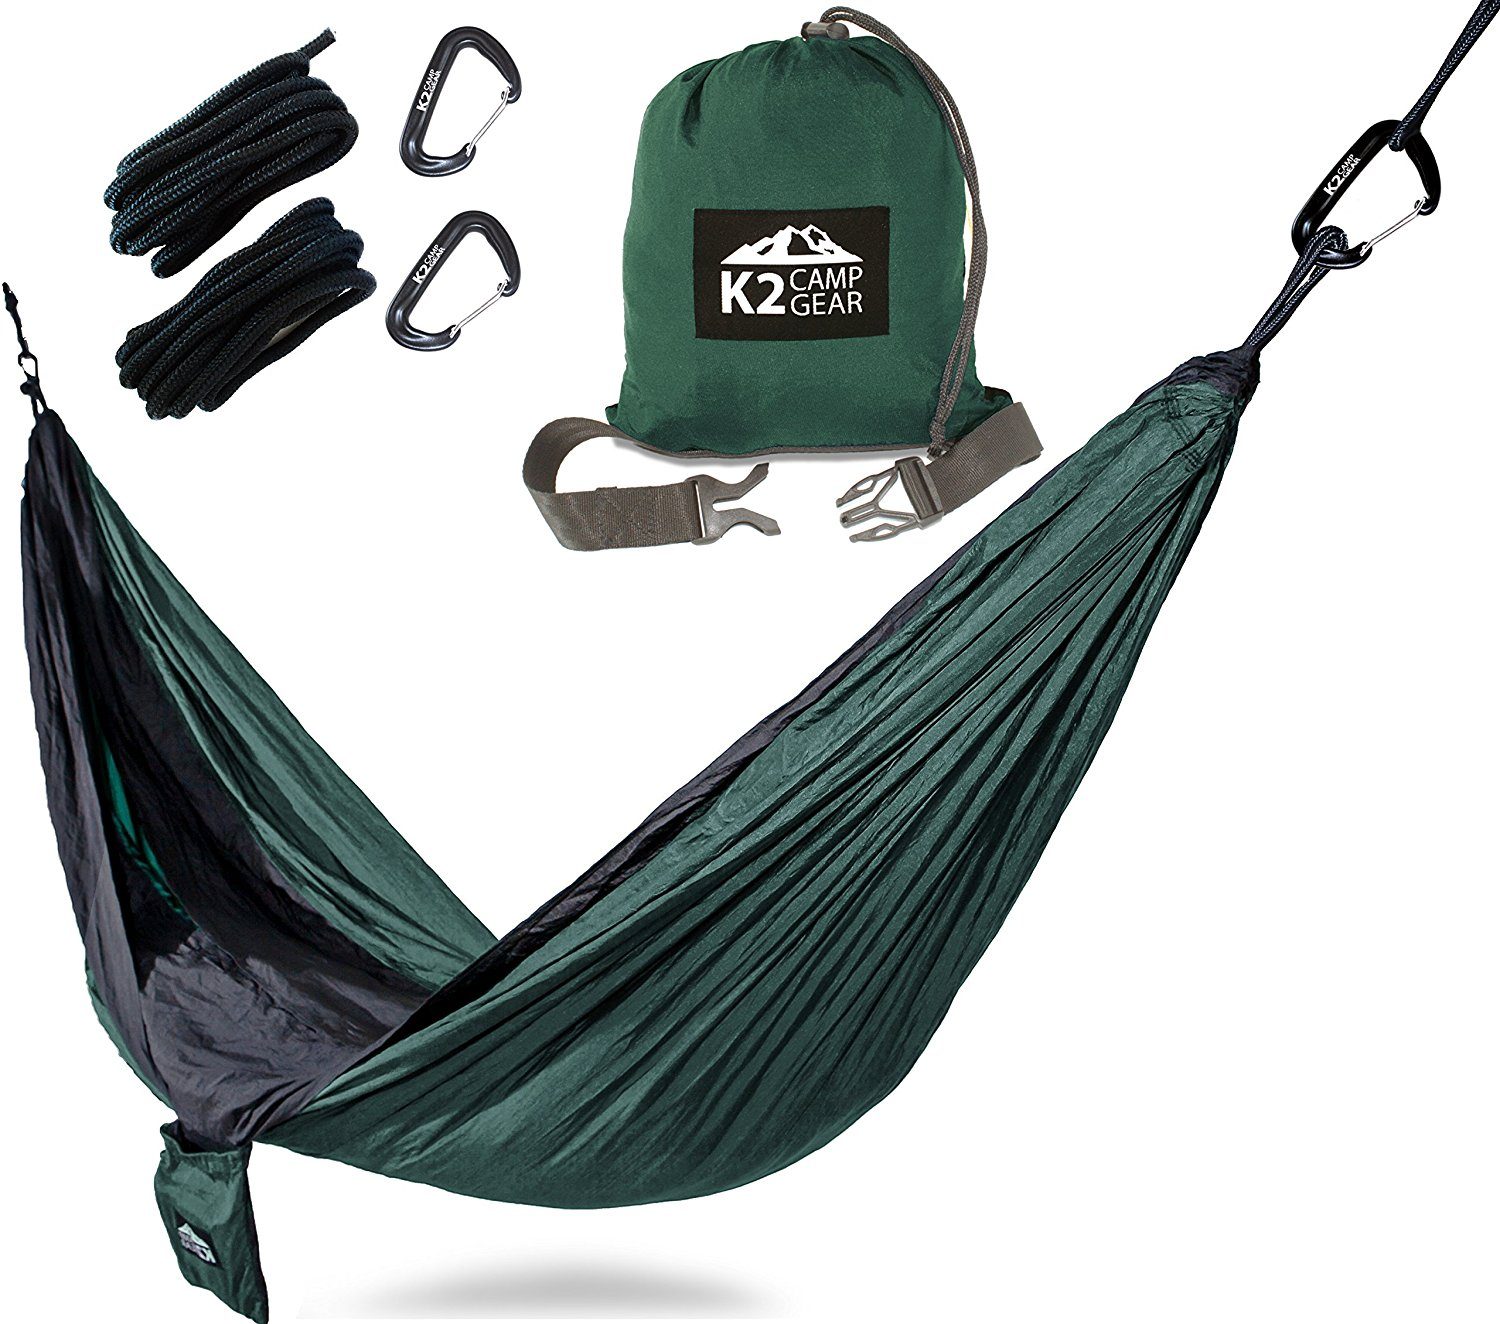 double camping hammock by k2 camp gear 